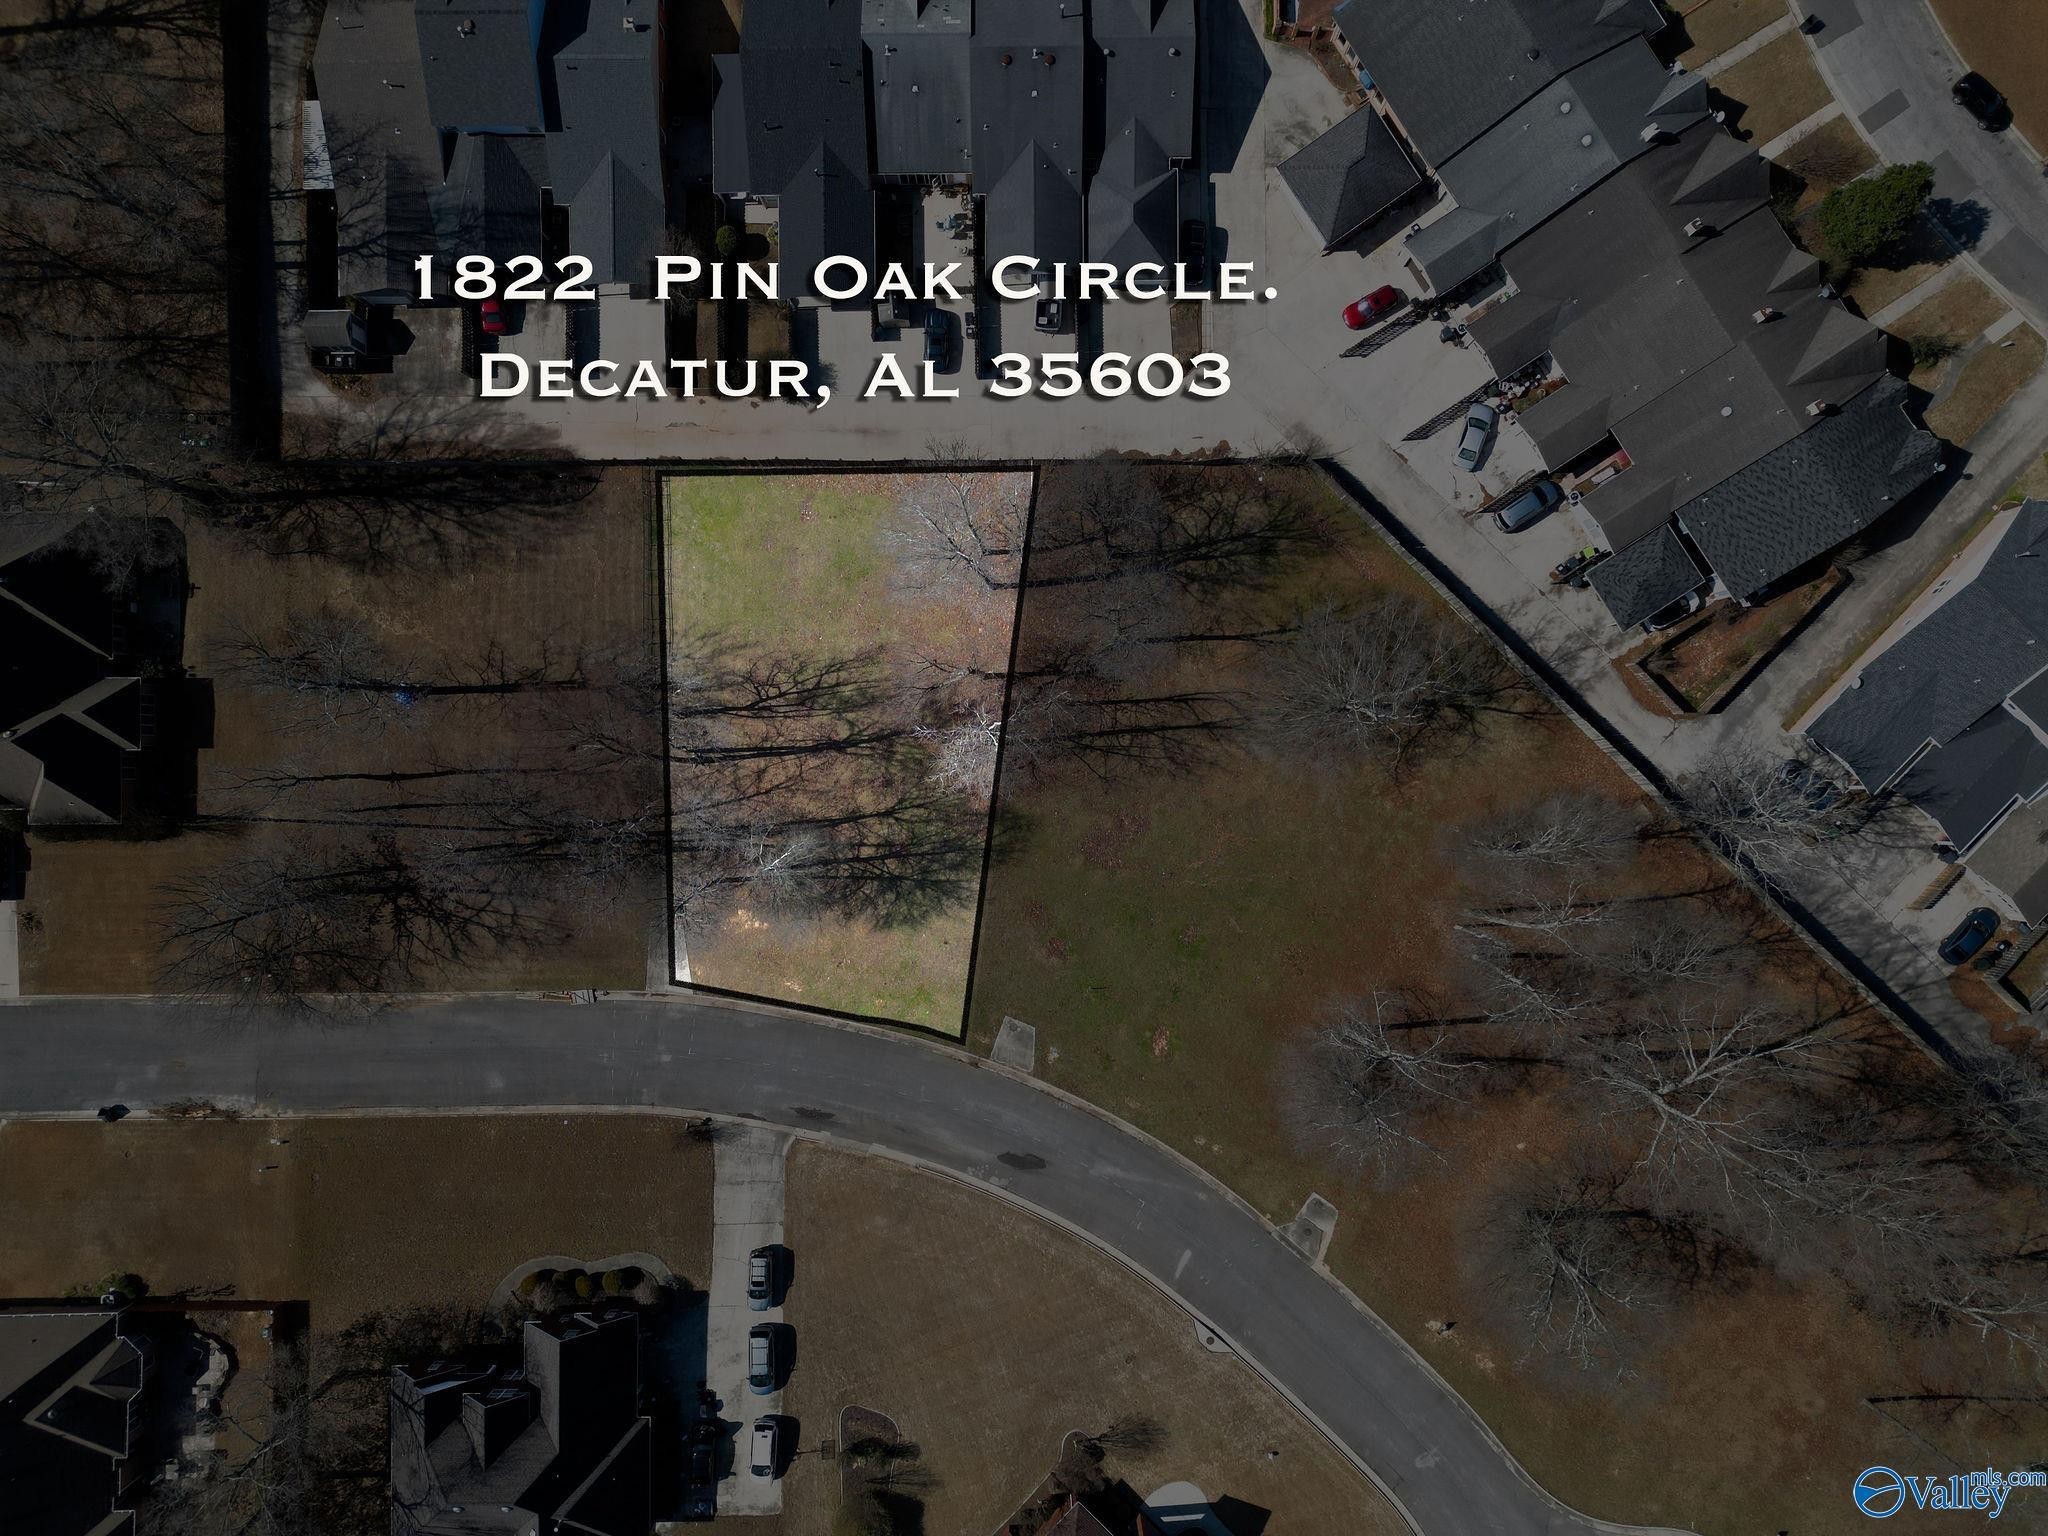 2. 1822 Pin Oak Circle